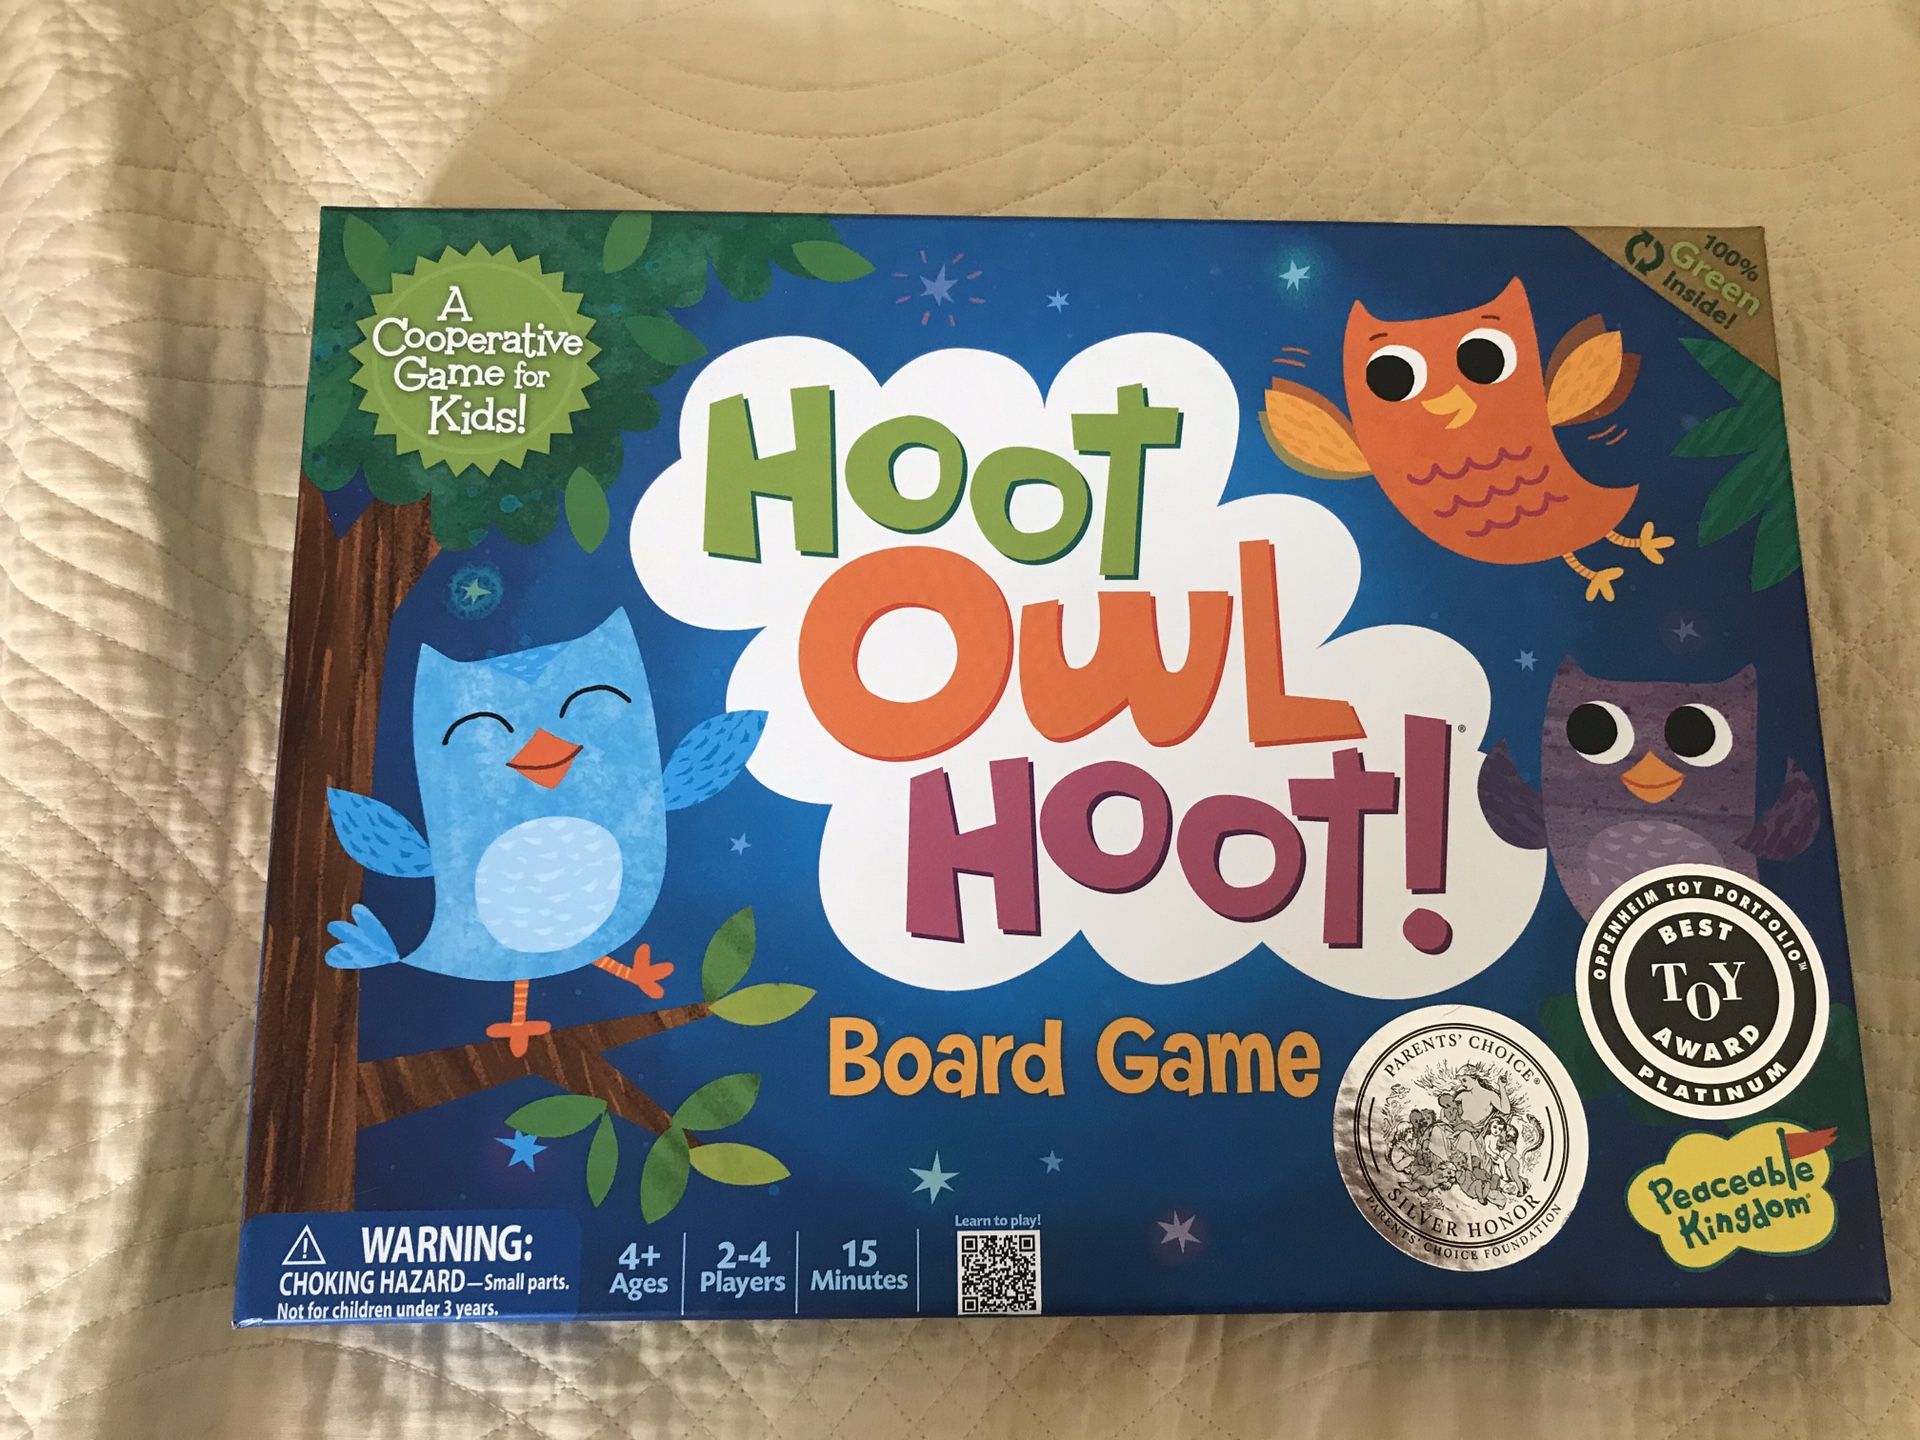 Hoot Owl shoot Board Game